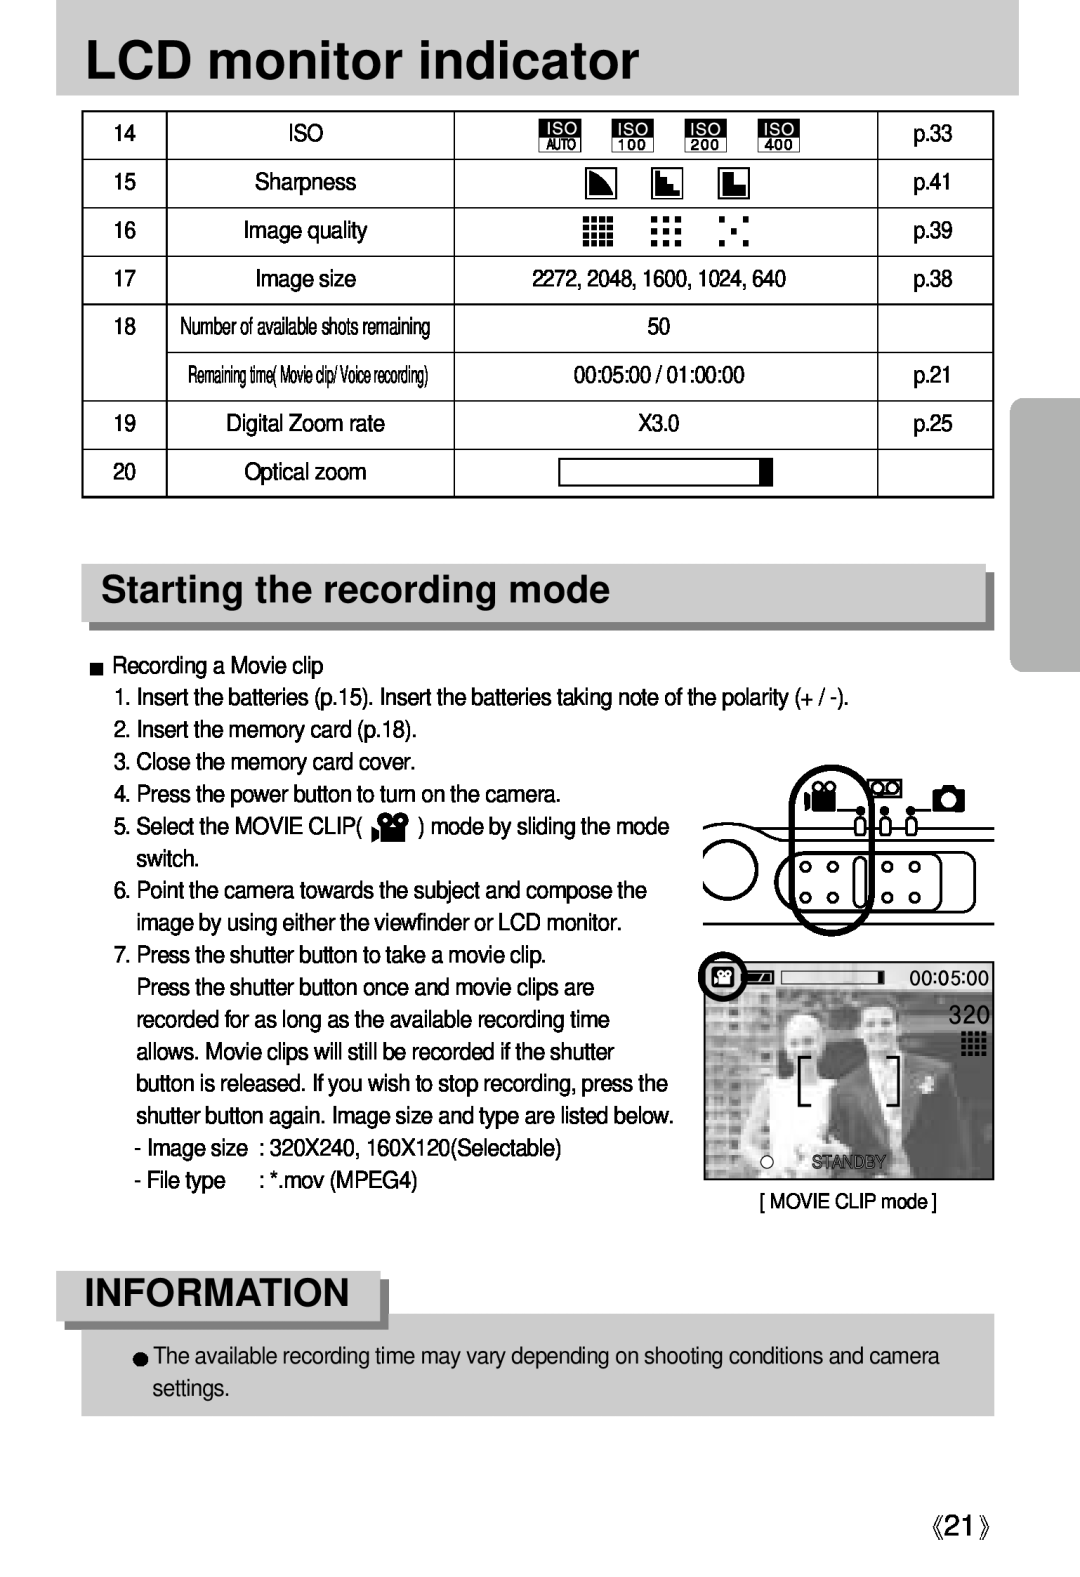 Samsung Digimax U-CA user manual Starting the recording mode, LCD monitor indicator, Information, p.33 